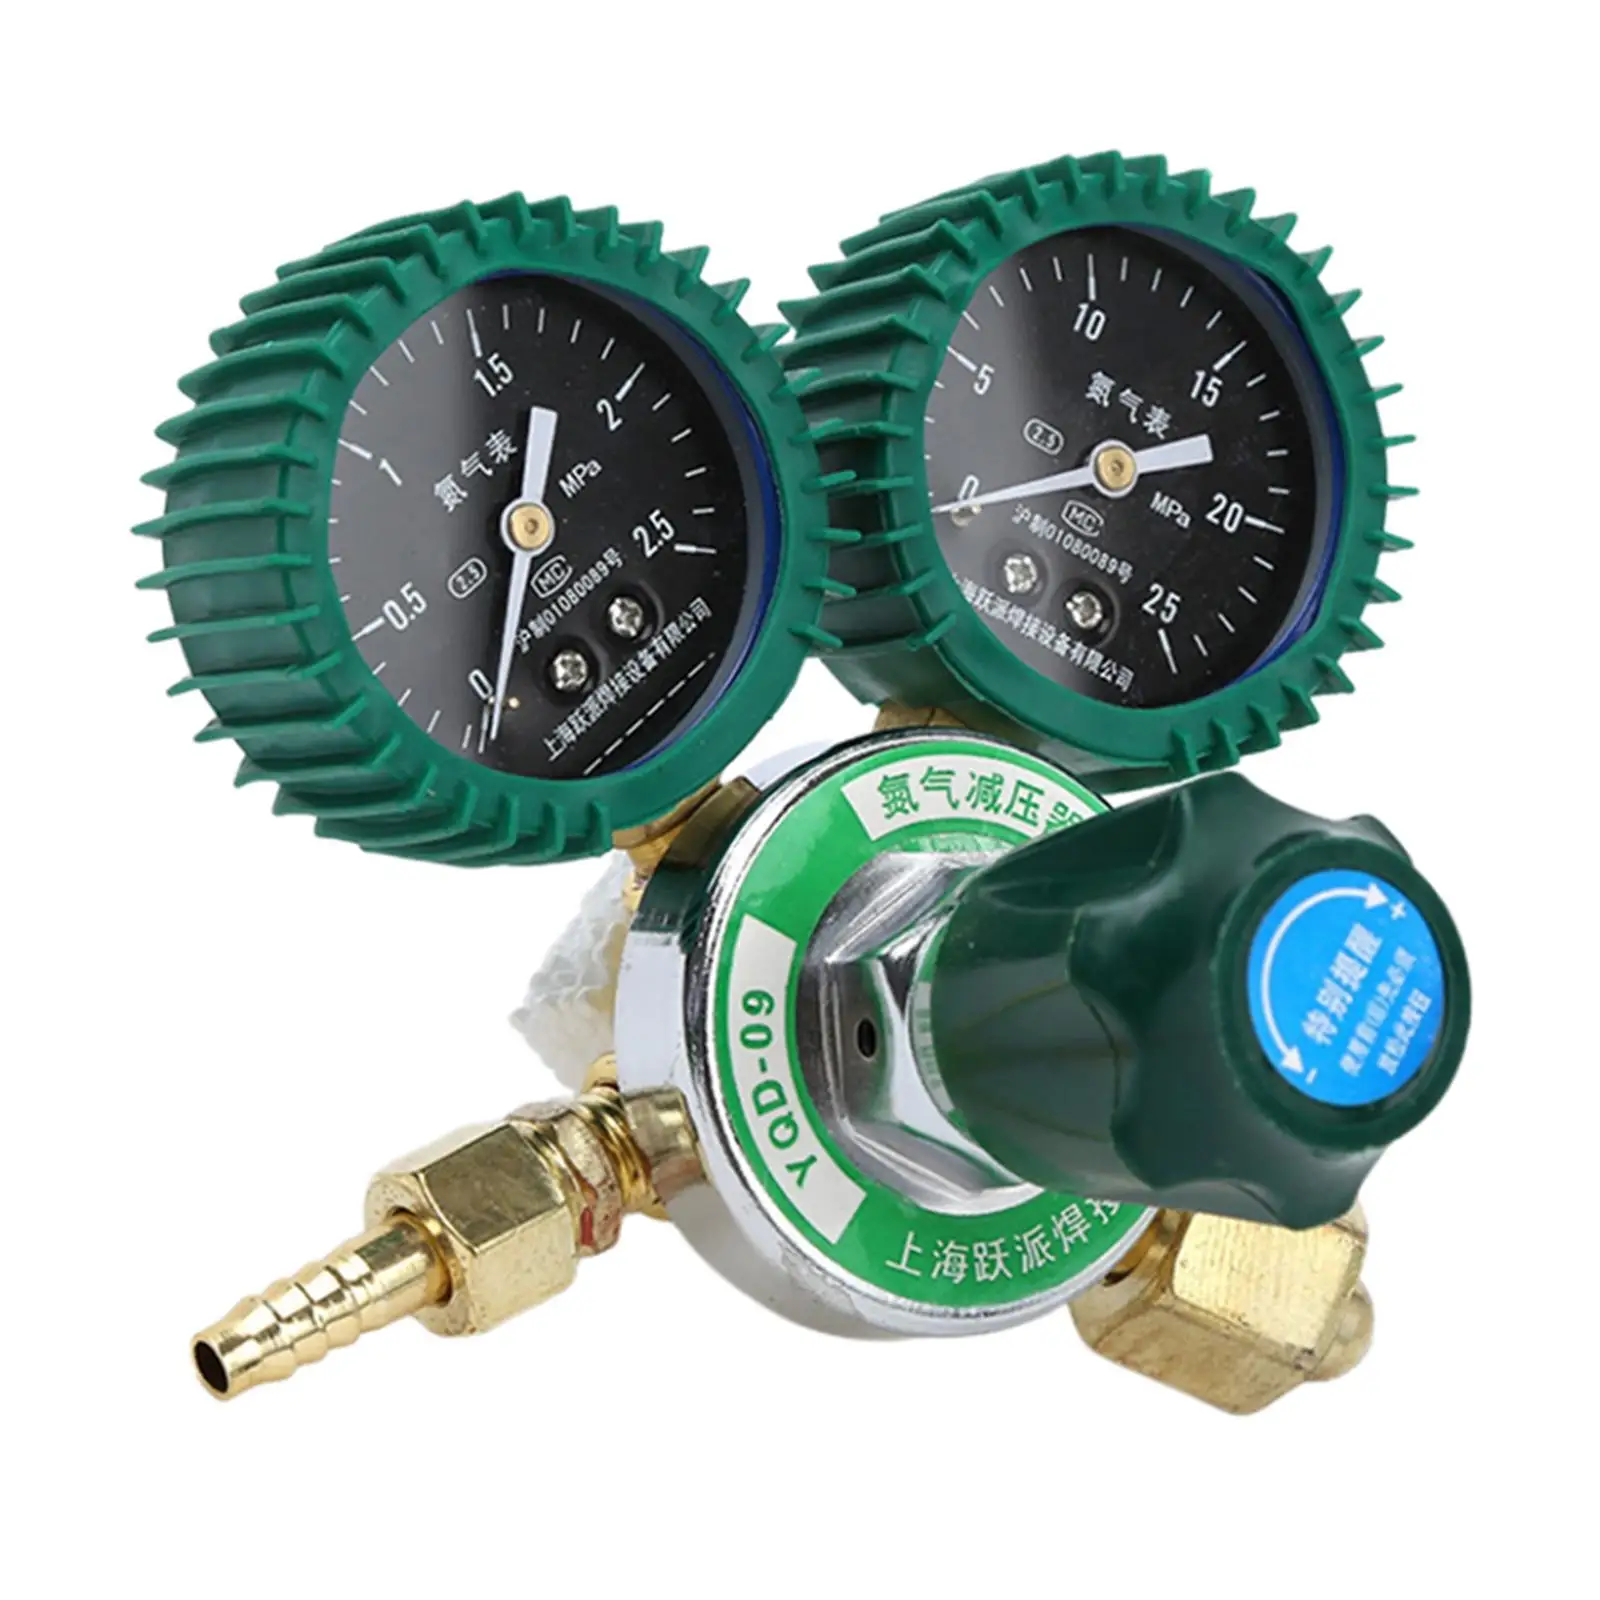  Pressure Reducing Valve Meter  Reducer Meter Brass Pneumatic Valve Control for Welders